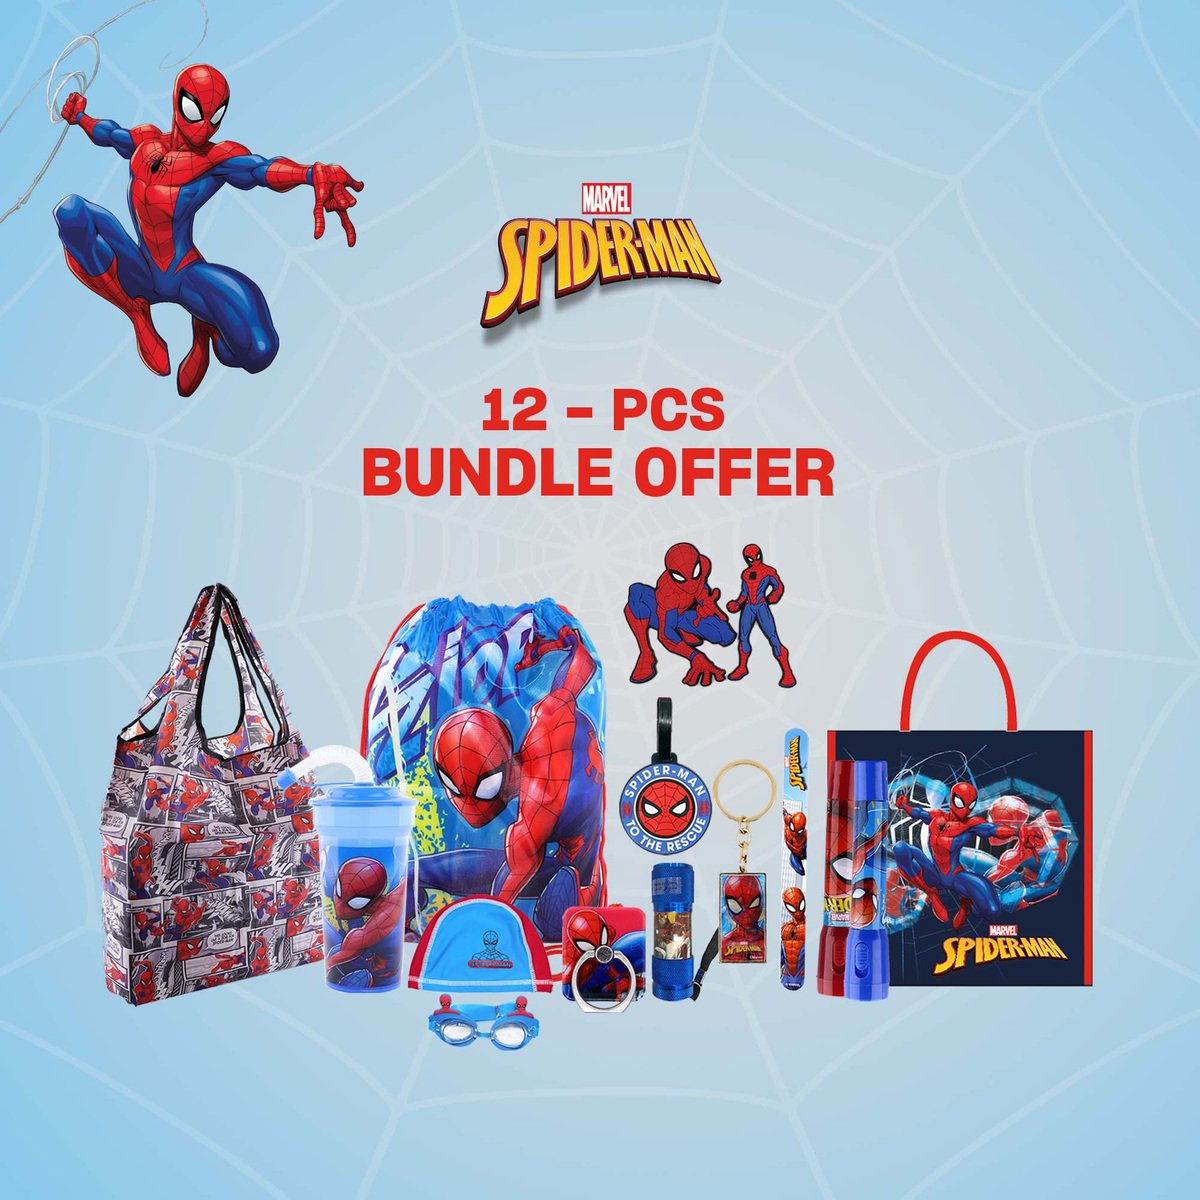 Marvel Spiderman 12 Pcs Bundle Pack Shopping bags , Slapband , Drawstring bag, Tumblers with straw, Fridget Magnet, and more.. - TRHA20895